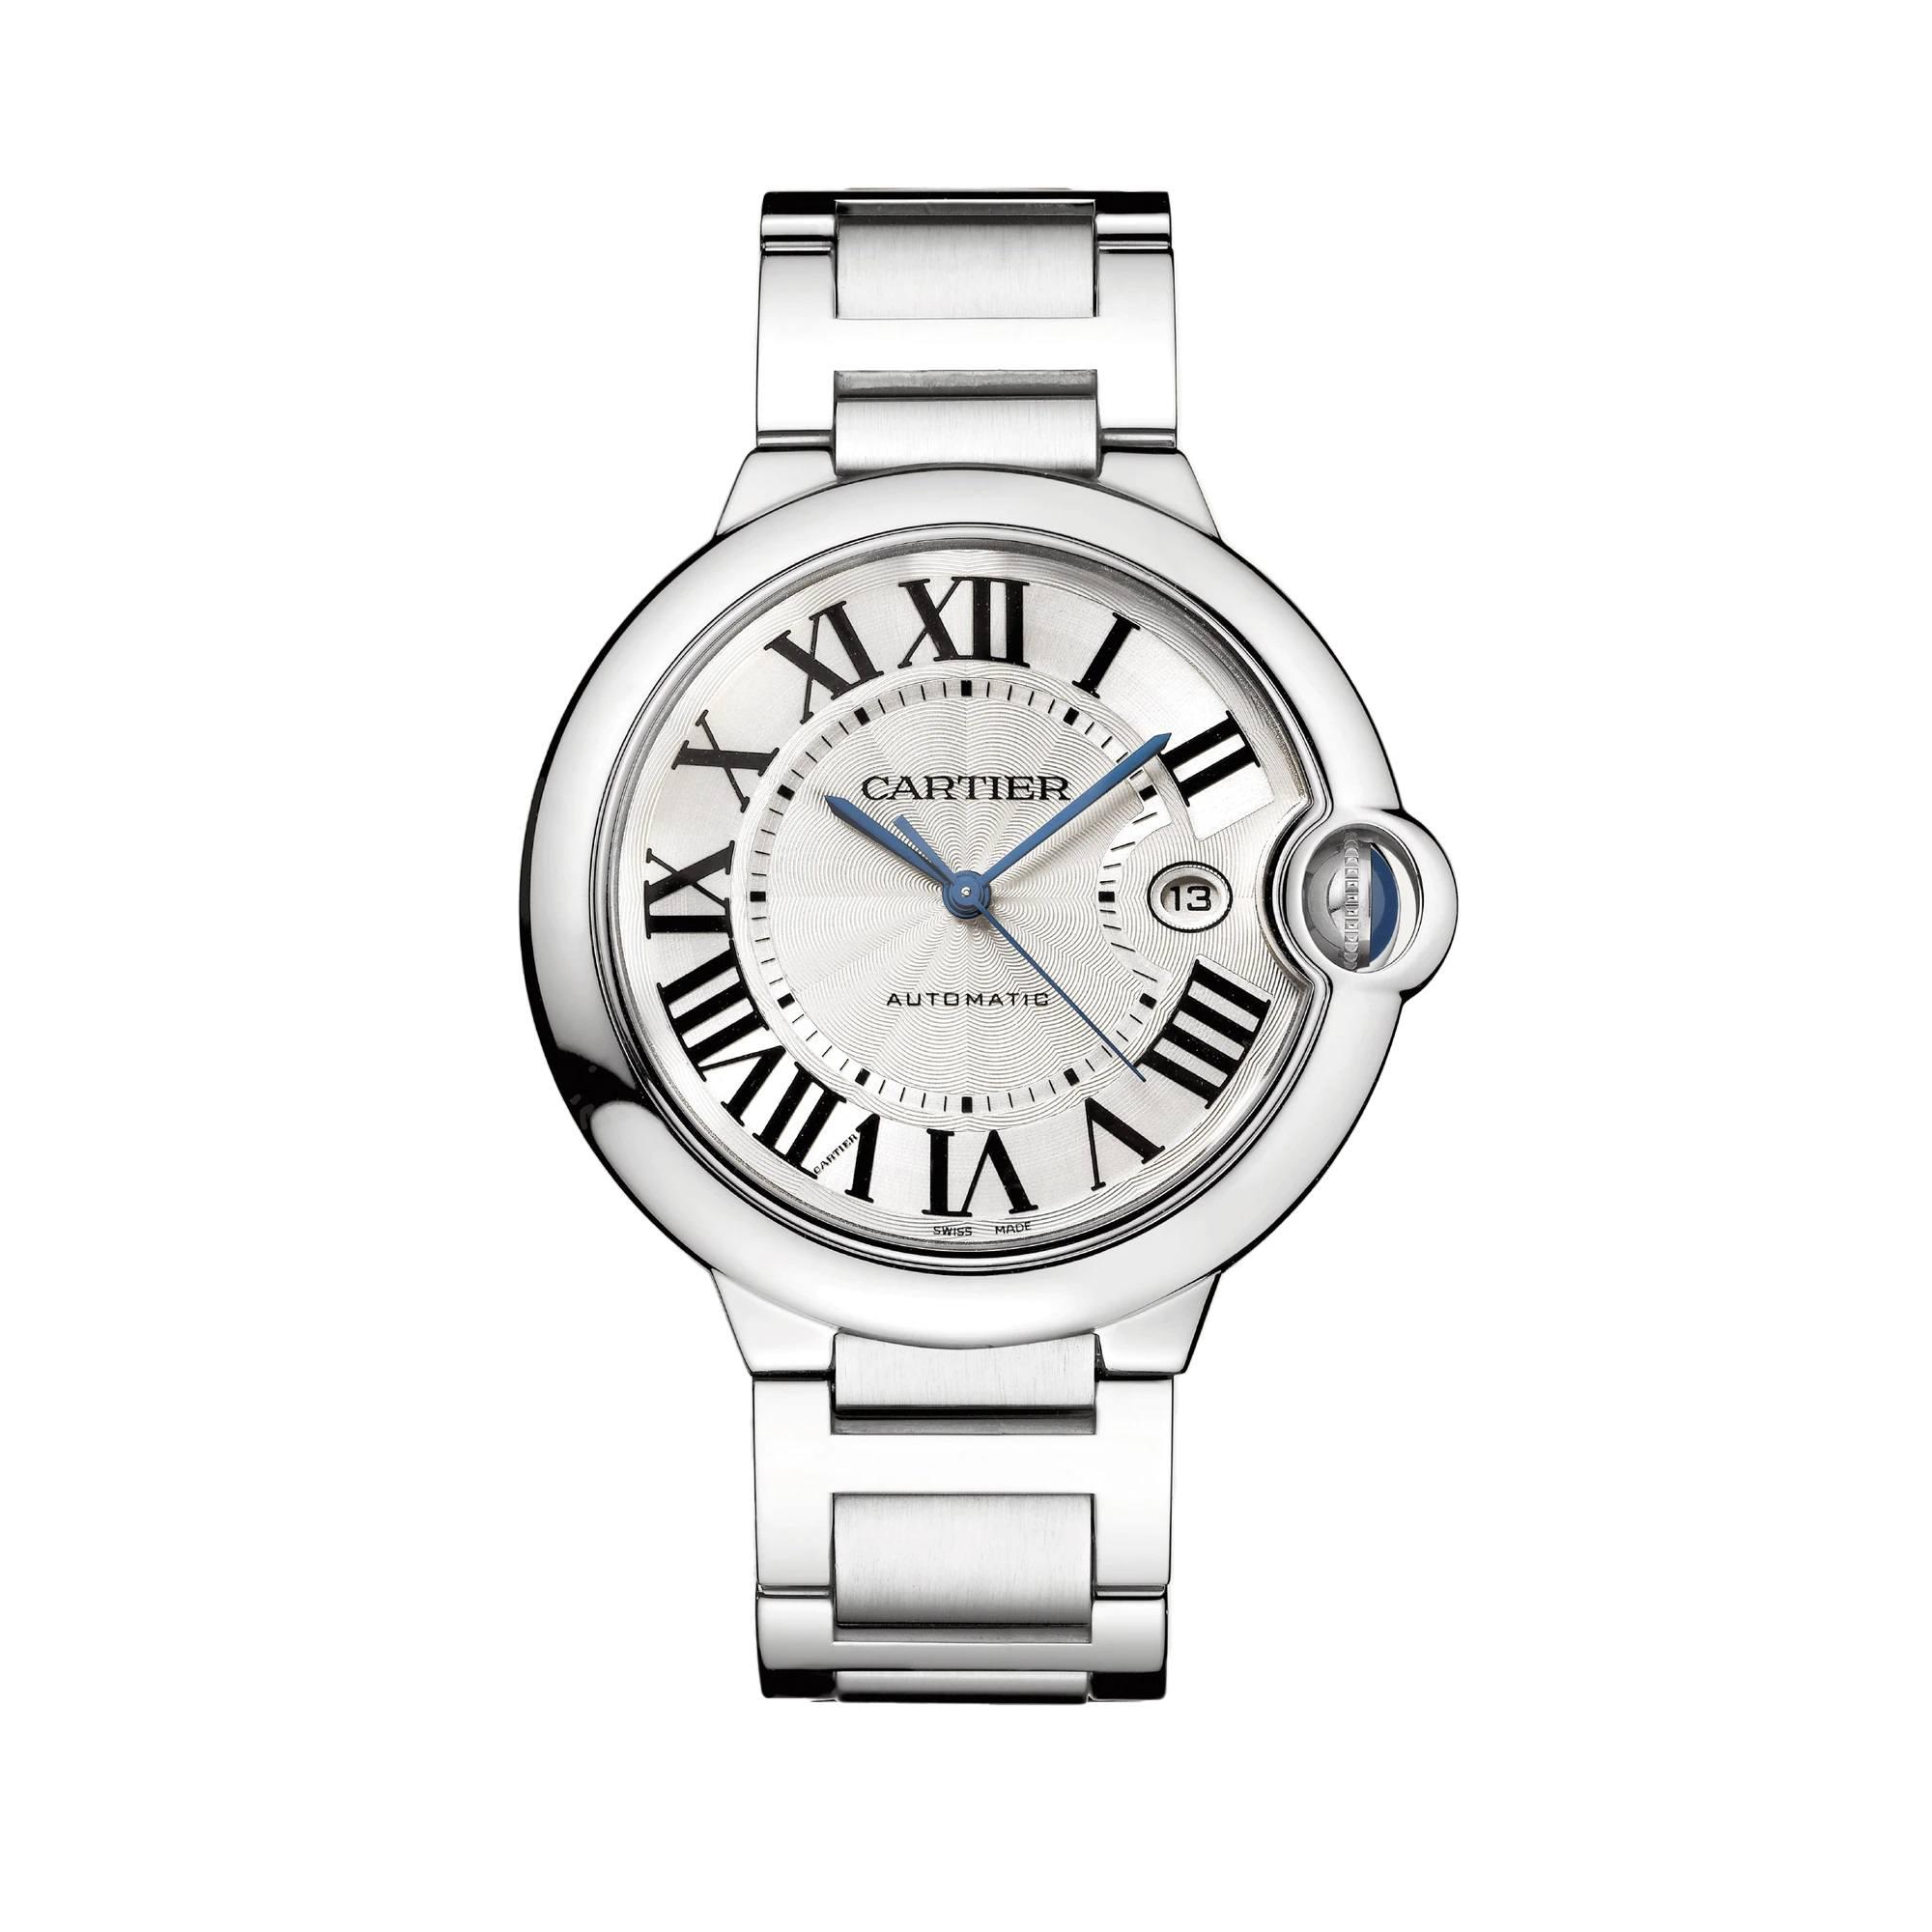 Ballon Bleu de Cartier Watch, Silver Guilloche Dial, 42mm
